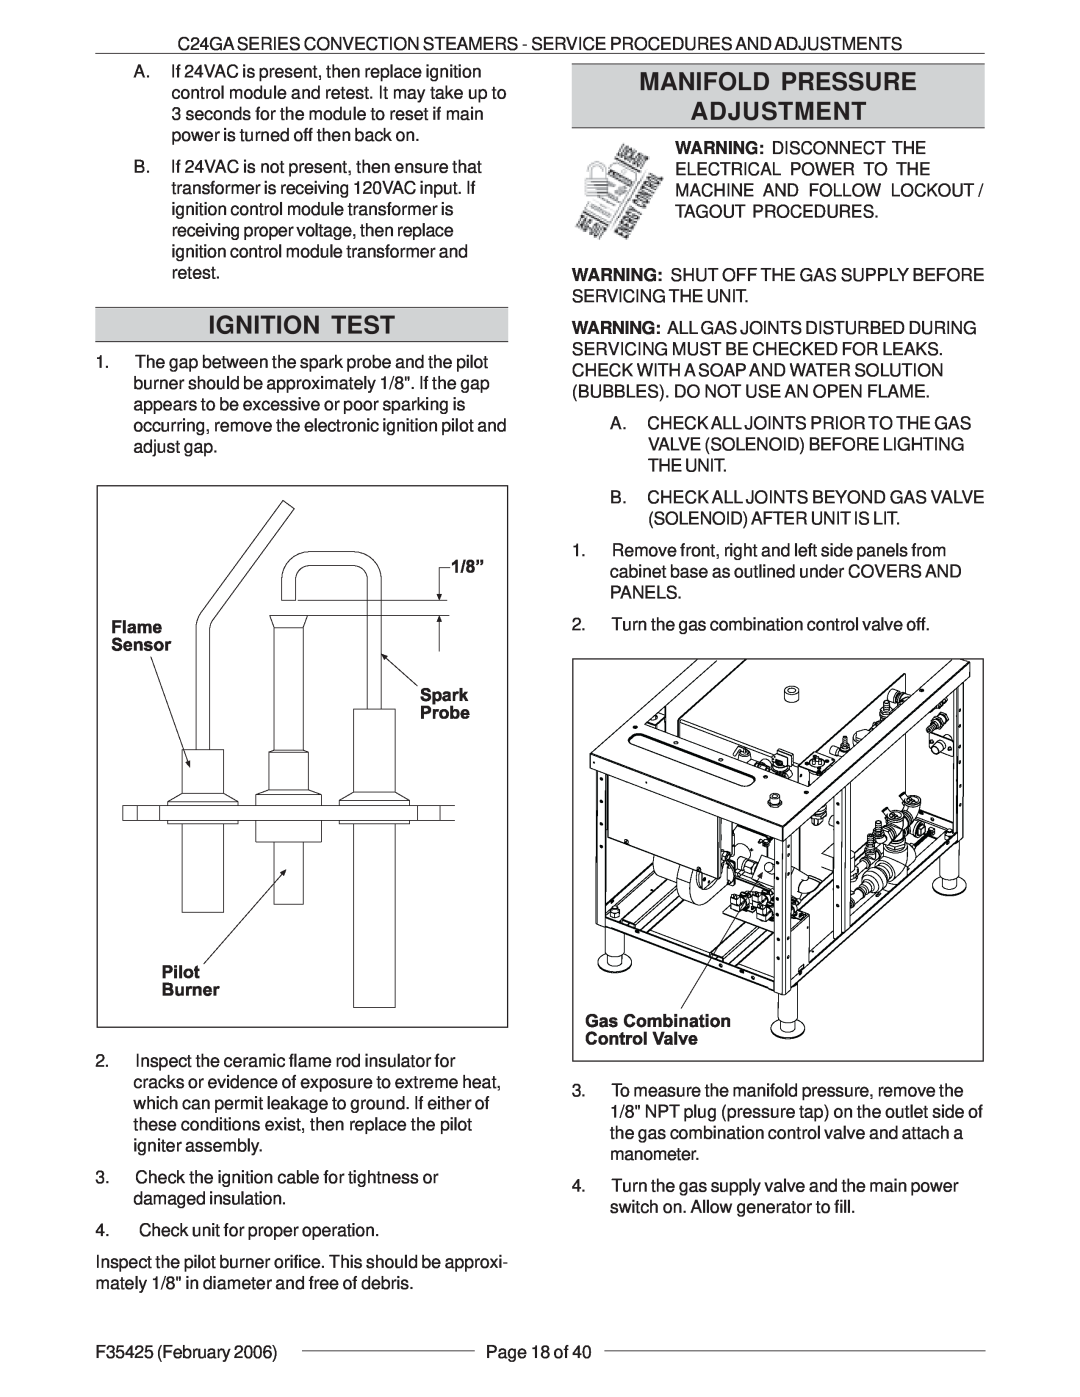 Vulcan-Hart C24GA6, C24GA10, ML-136021, ML-136022 service manual Ignition Test, Manifold Pressure Adjustment 